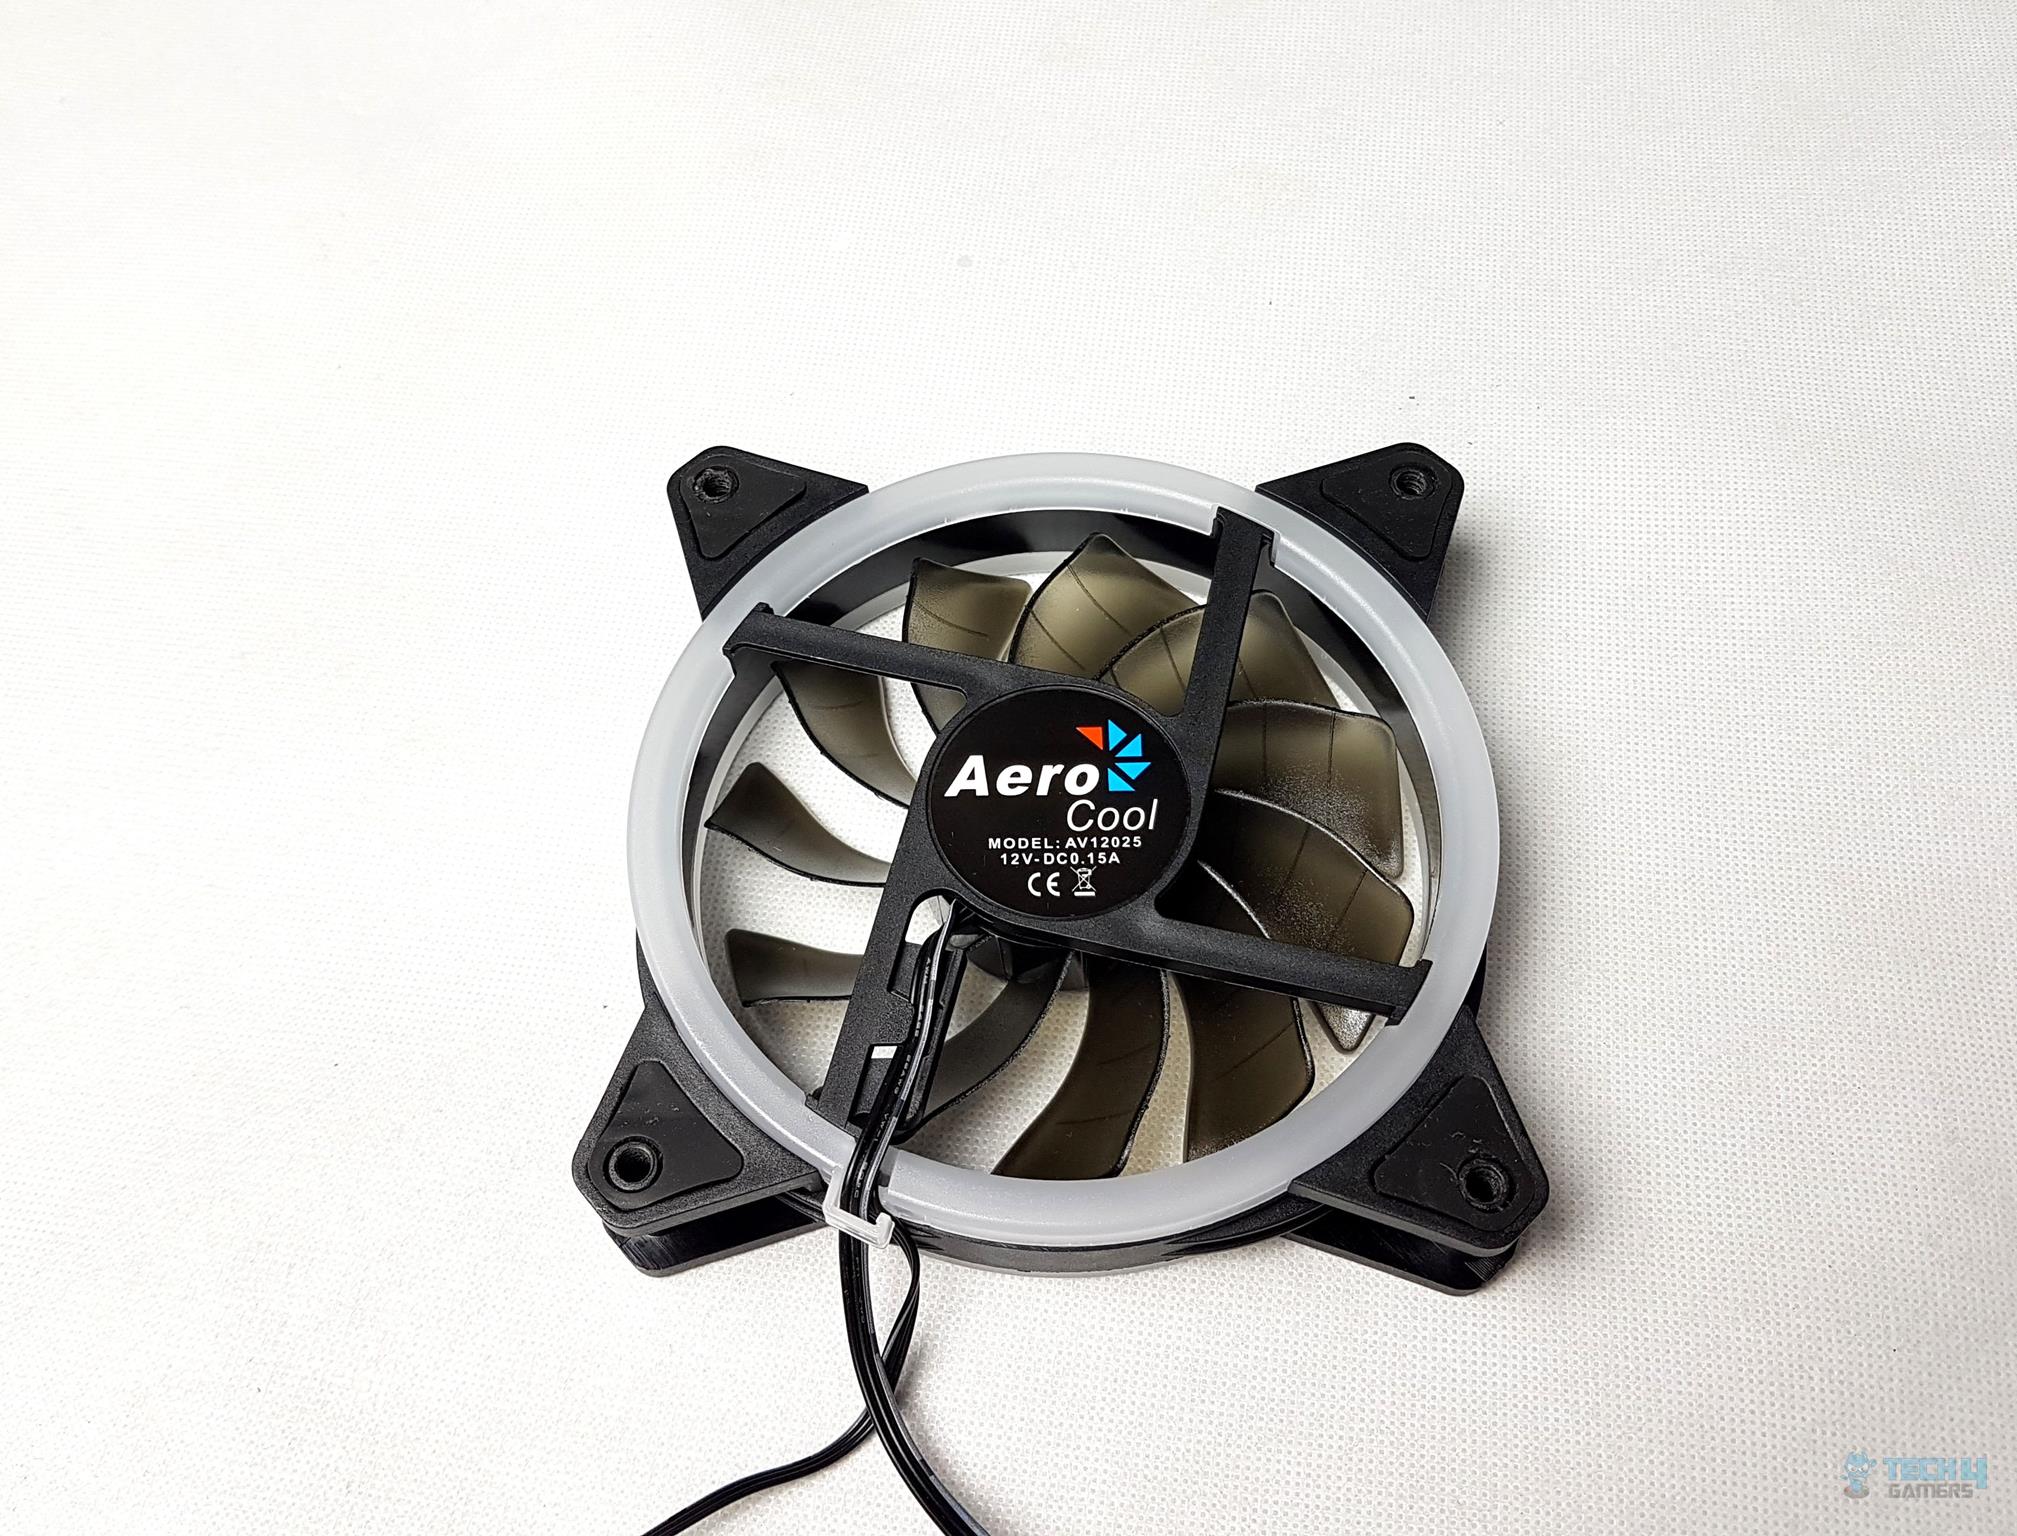  Aerocool Quartz Revo RGB Mid-Tower Chassis — The backside of the fan